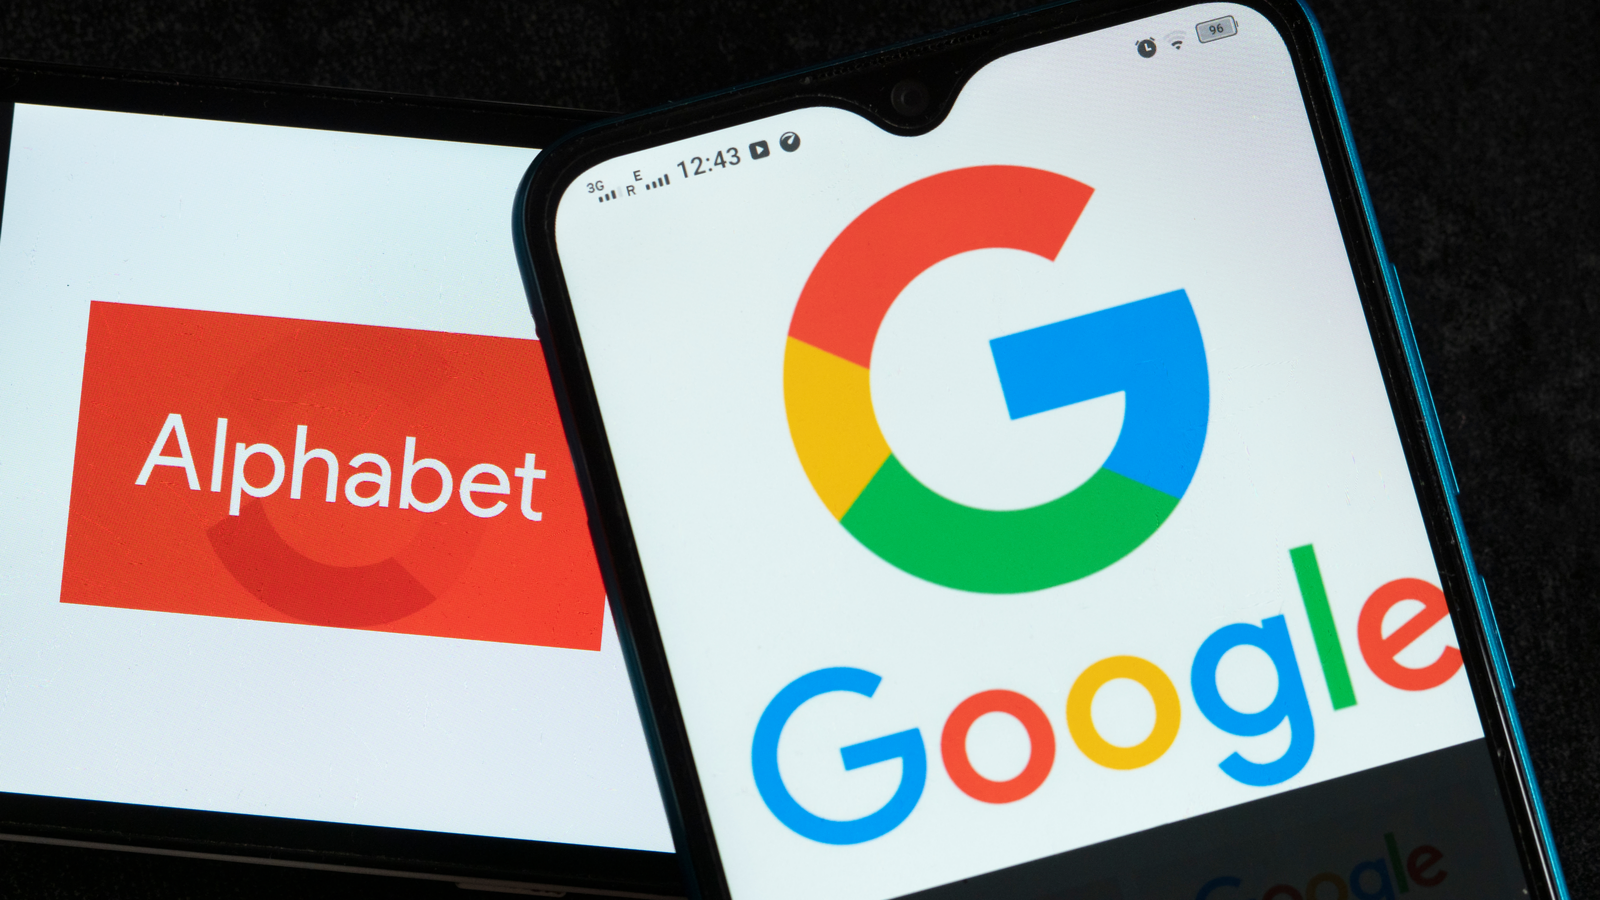 Alphabet Inc. (GOOG, GOOGL stock) and Google logos seen displayed on smartphones